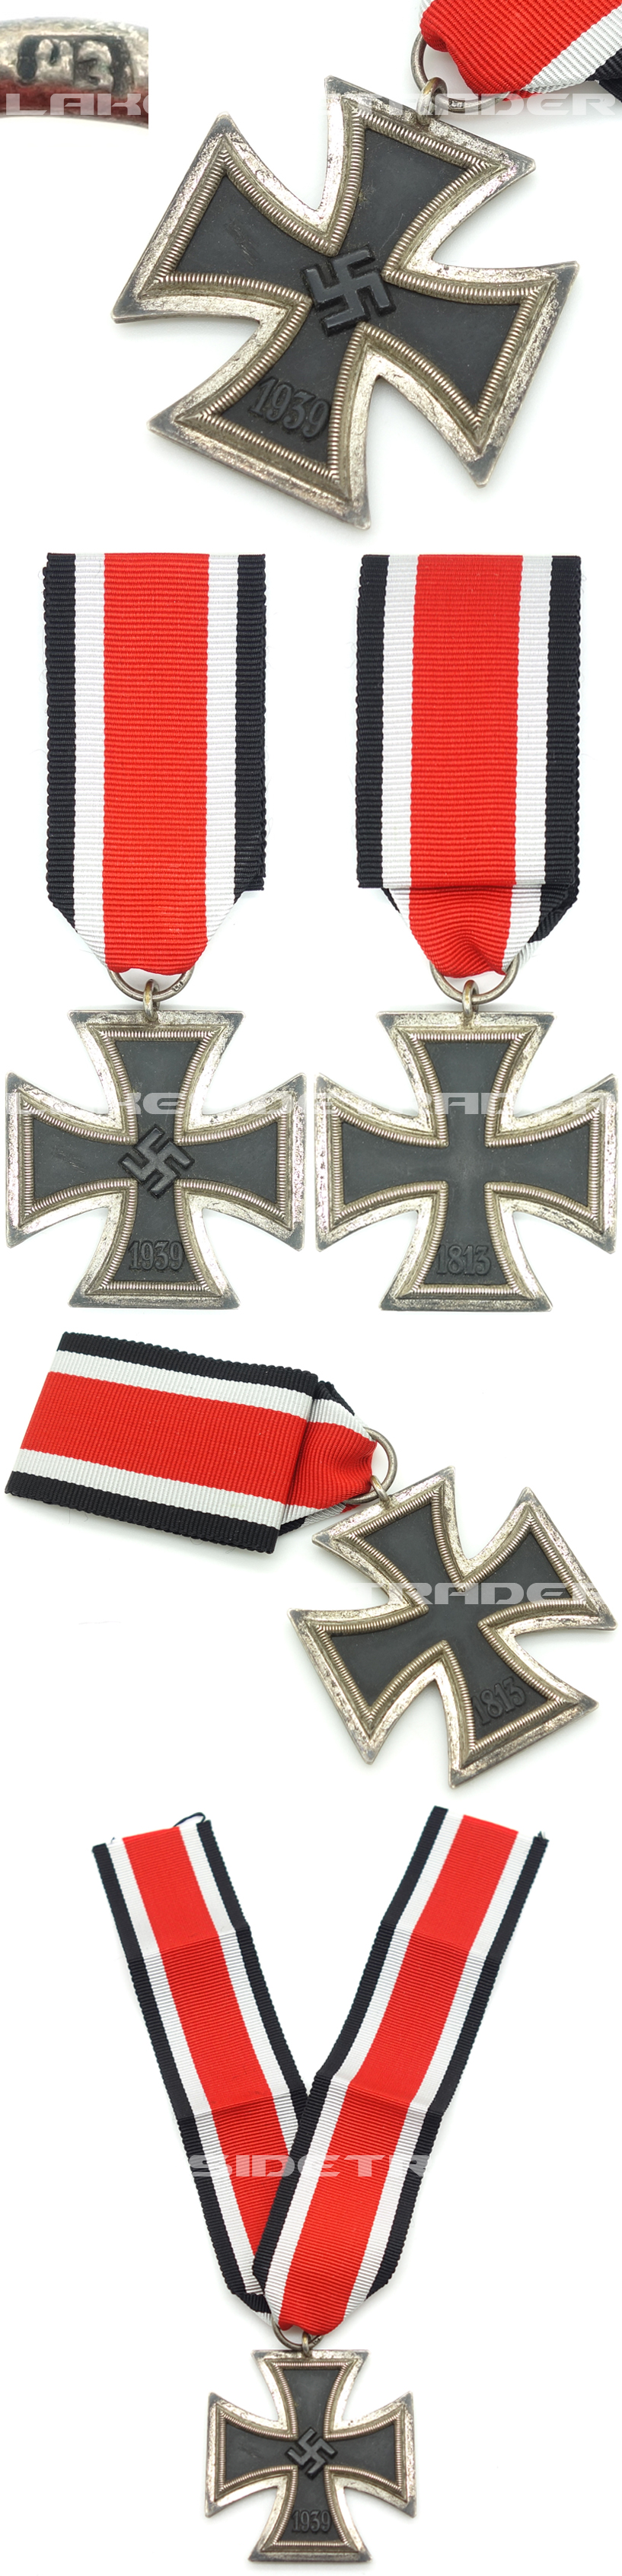 2nd Class Iron Cross by 93